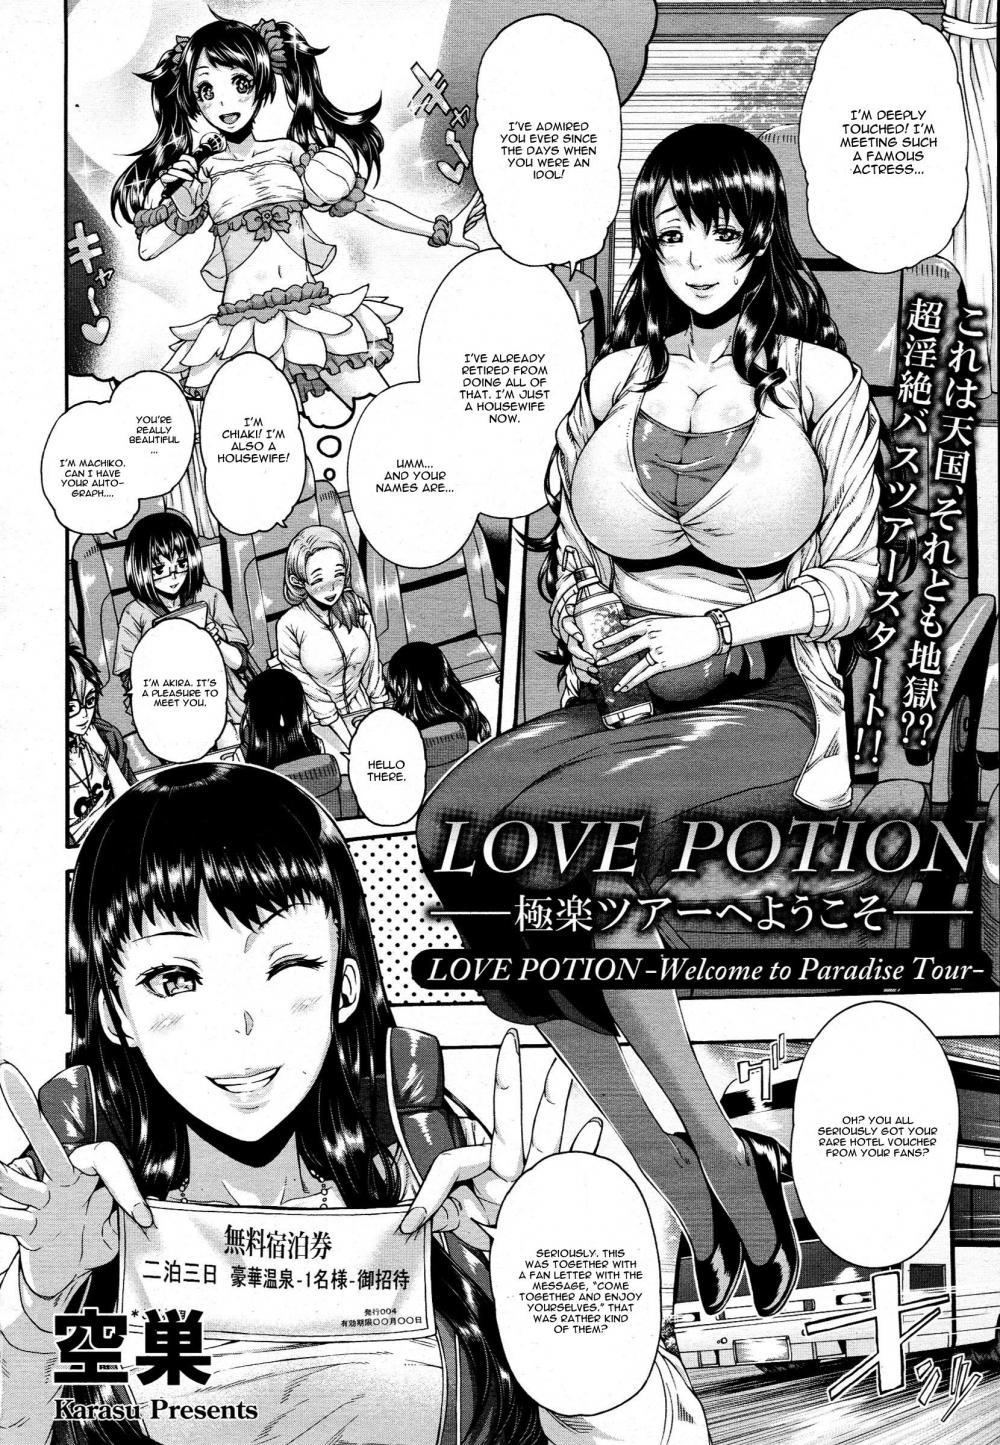 Hentai Manga Comic-Love Potion-Chapter 1 - Welcome to paradise tour-2